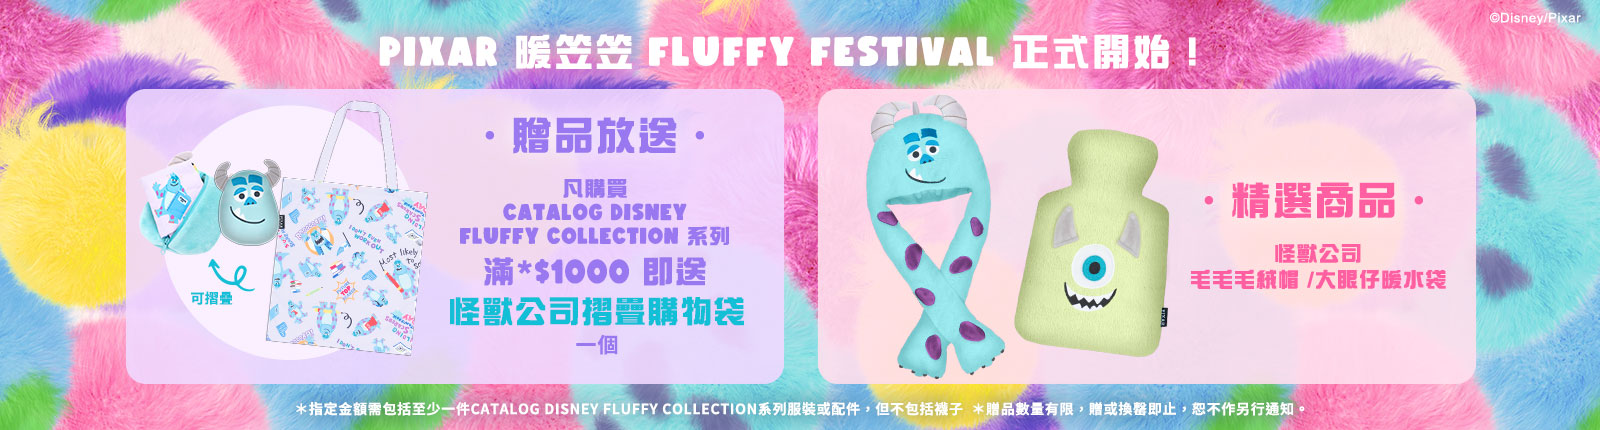 Catalog Disney Fluffy Collection